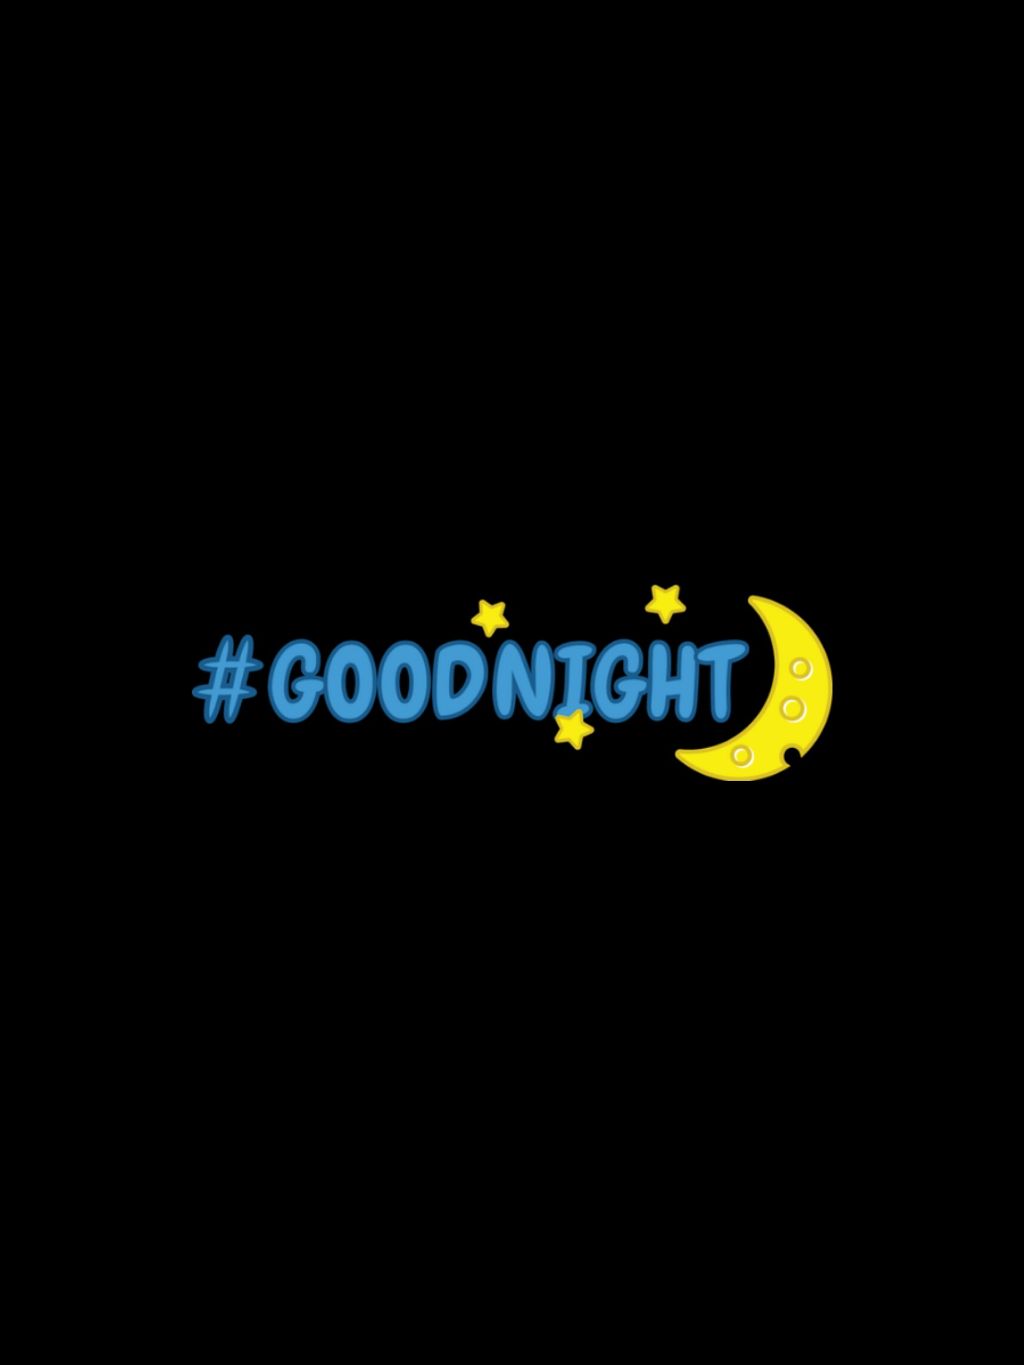 Good Night ✨
so Close To 11k😍 - Graphic Design - HD Wallpaper 